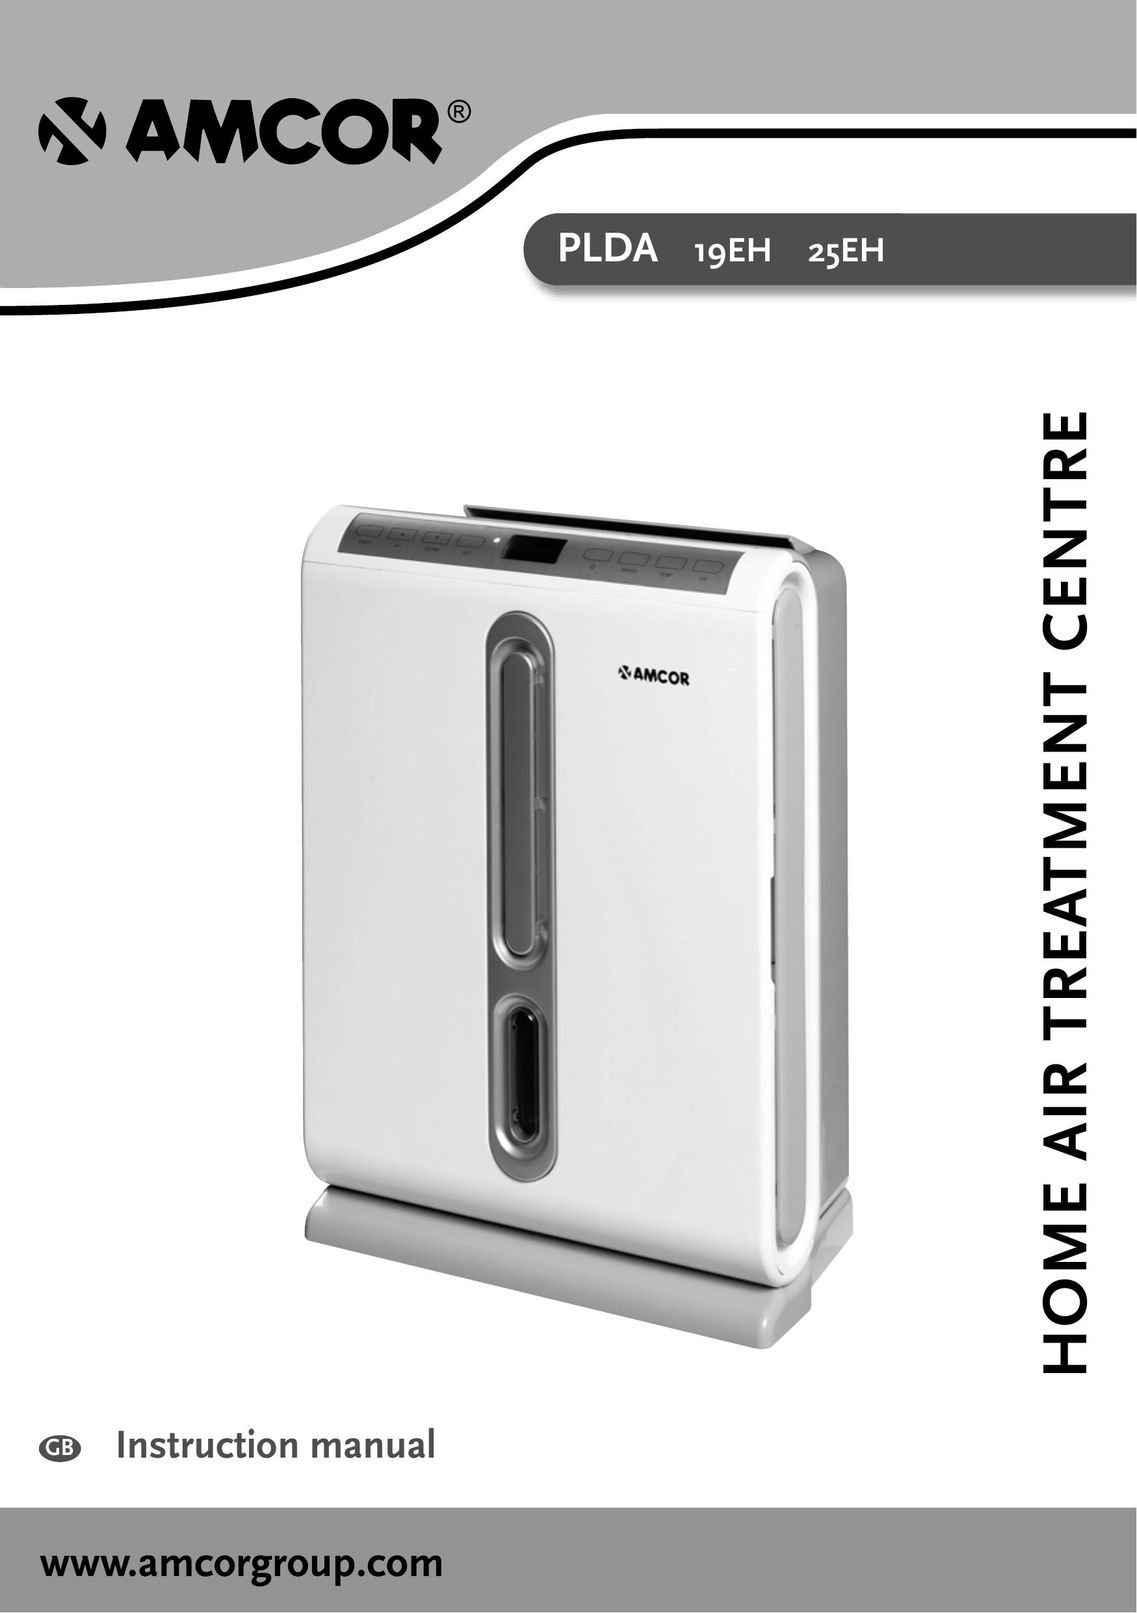 Amcor PLDA Electric Heater User Manual